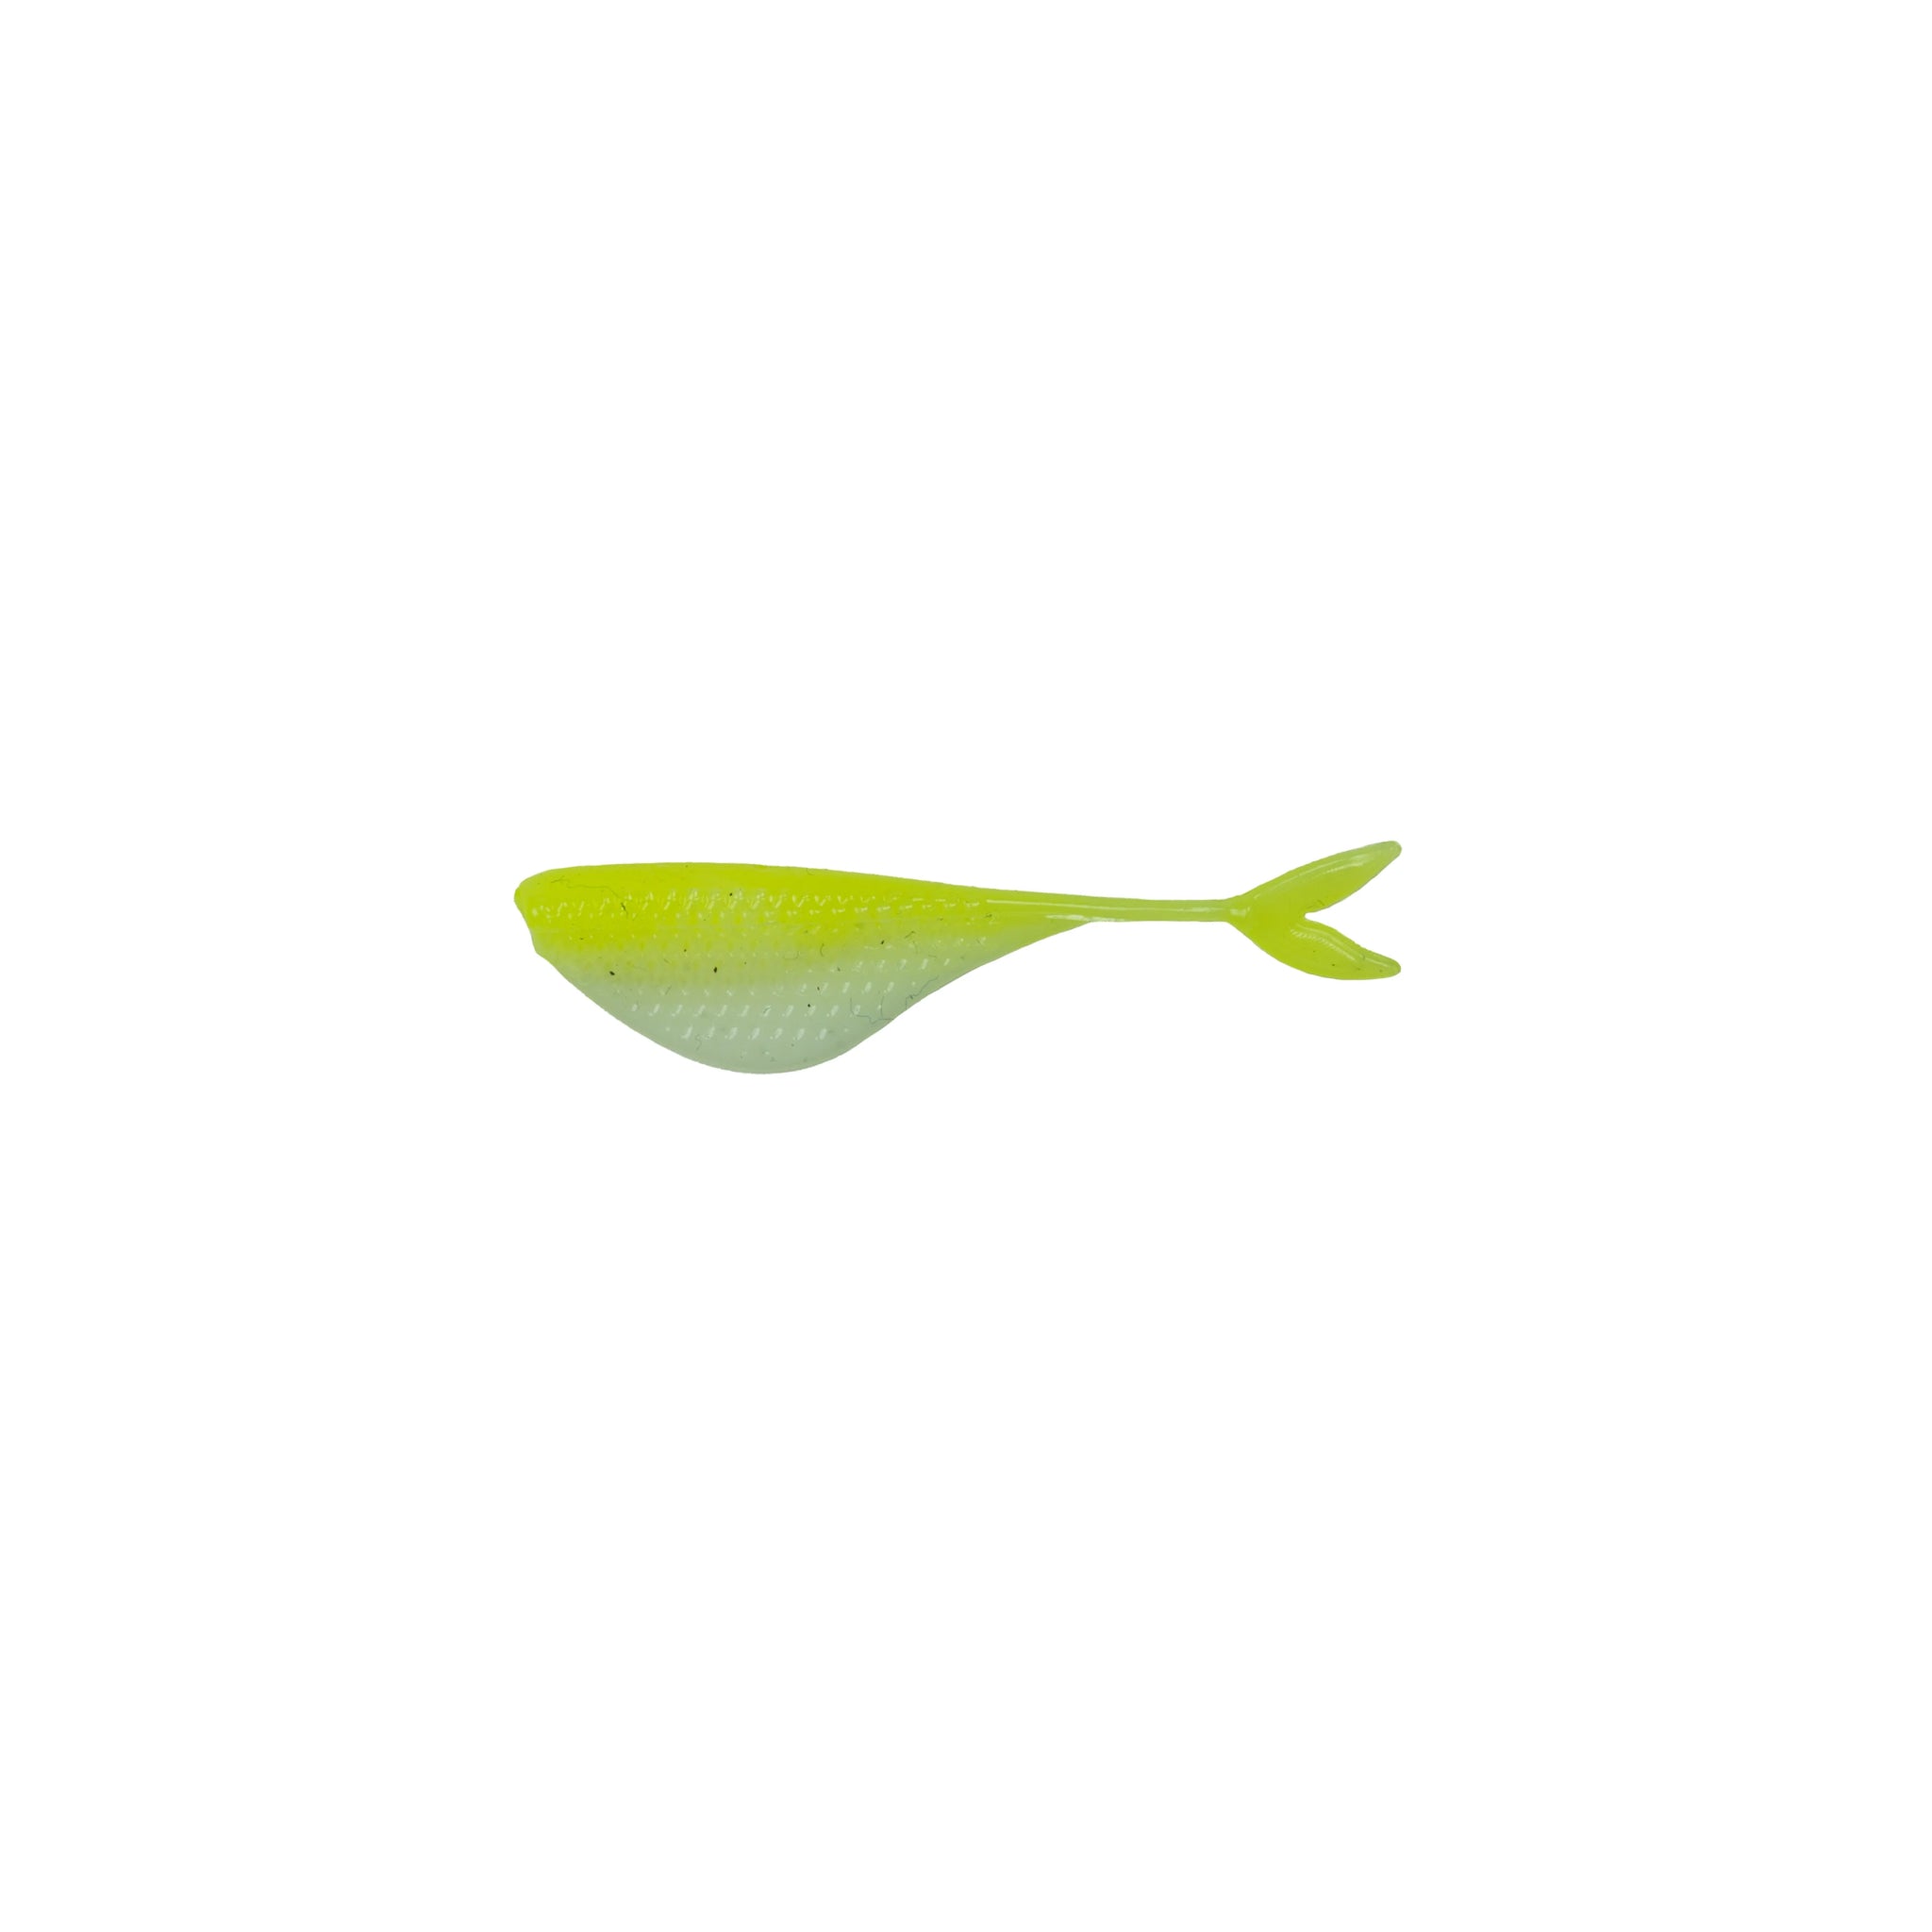 6th Sense Fishing - Crappie - Clobber Minnow - Chartreuse Minnow